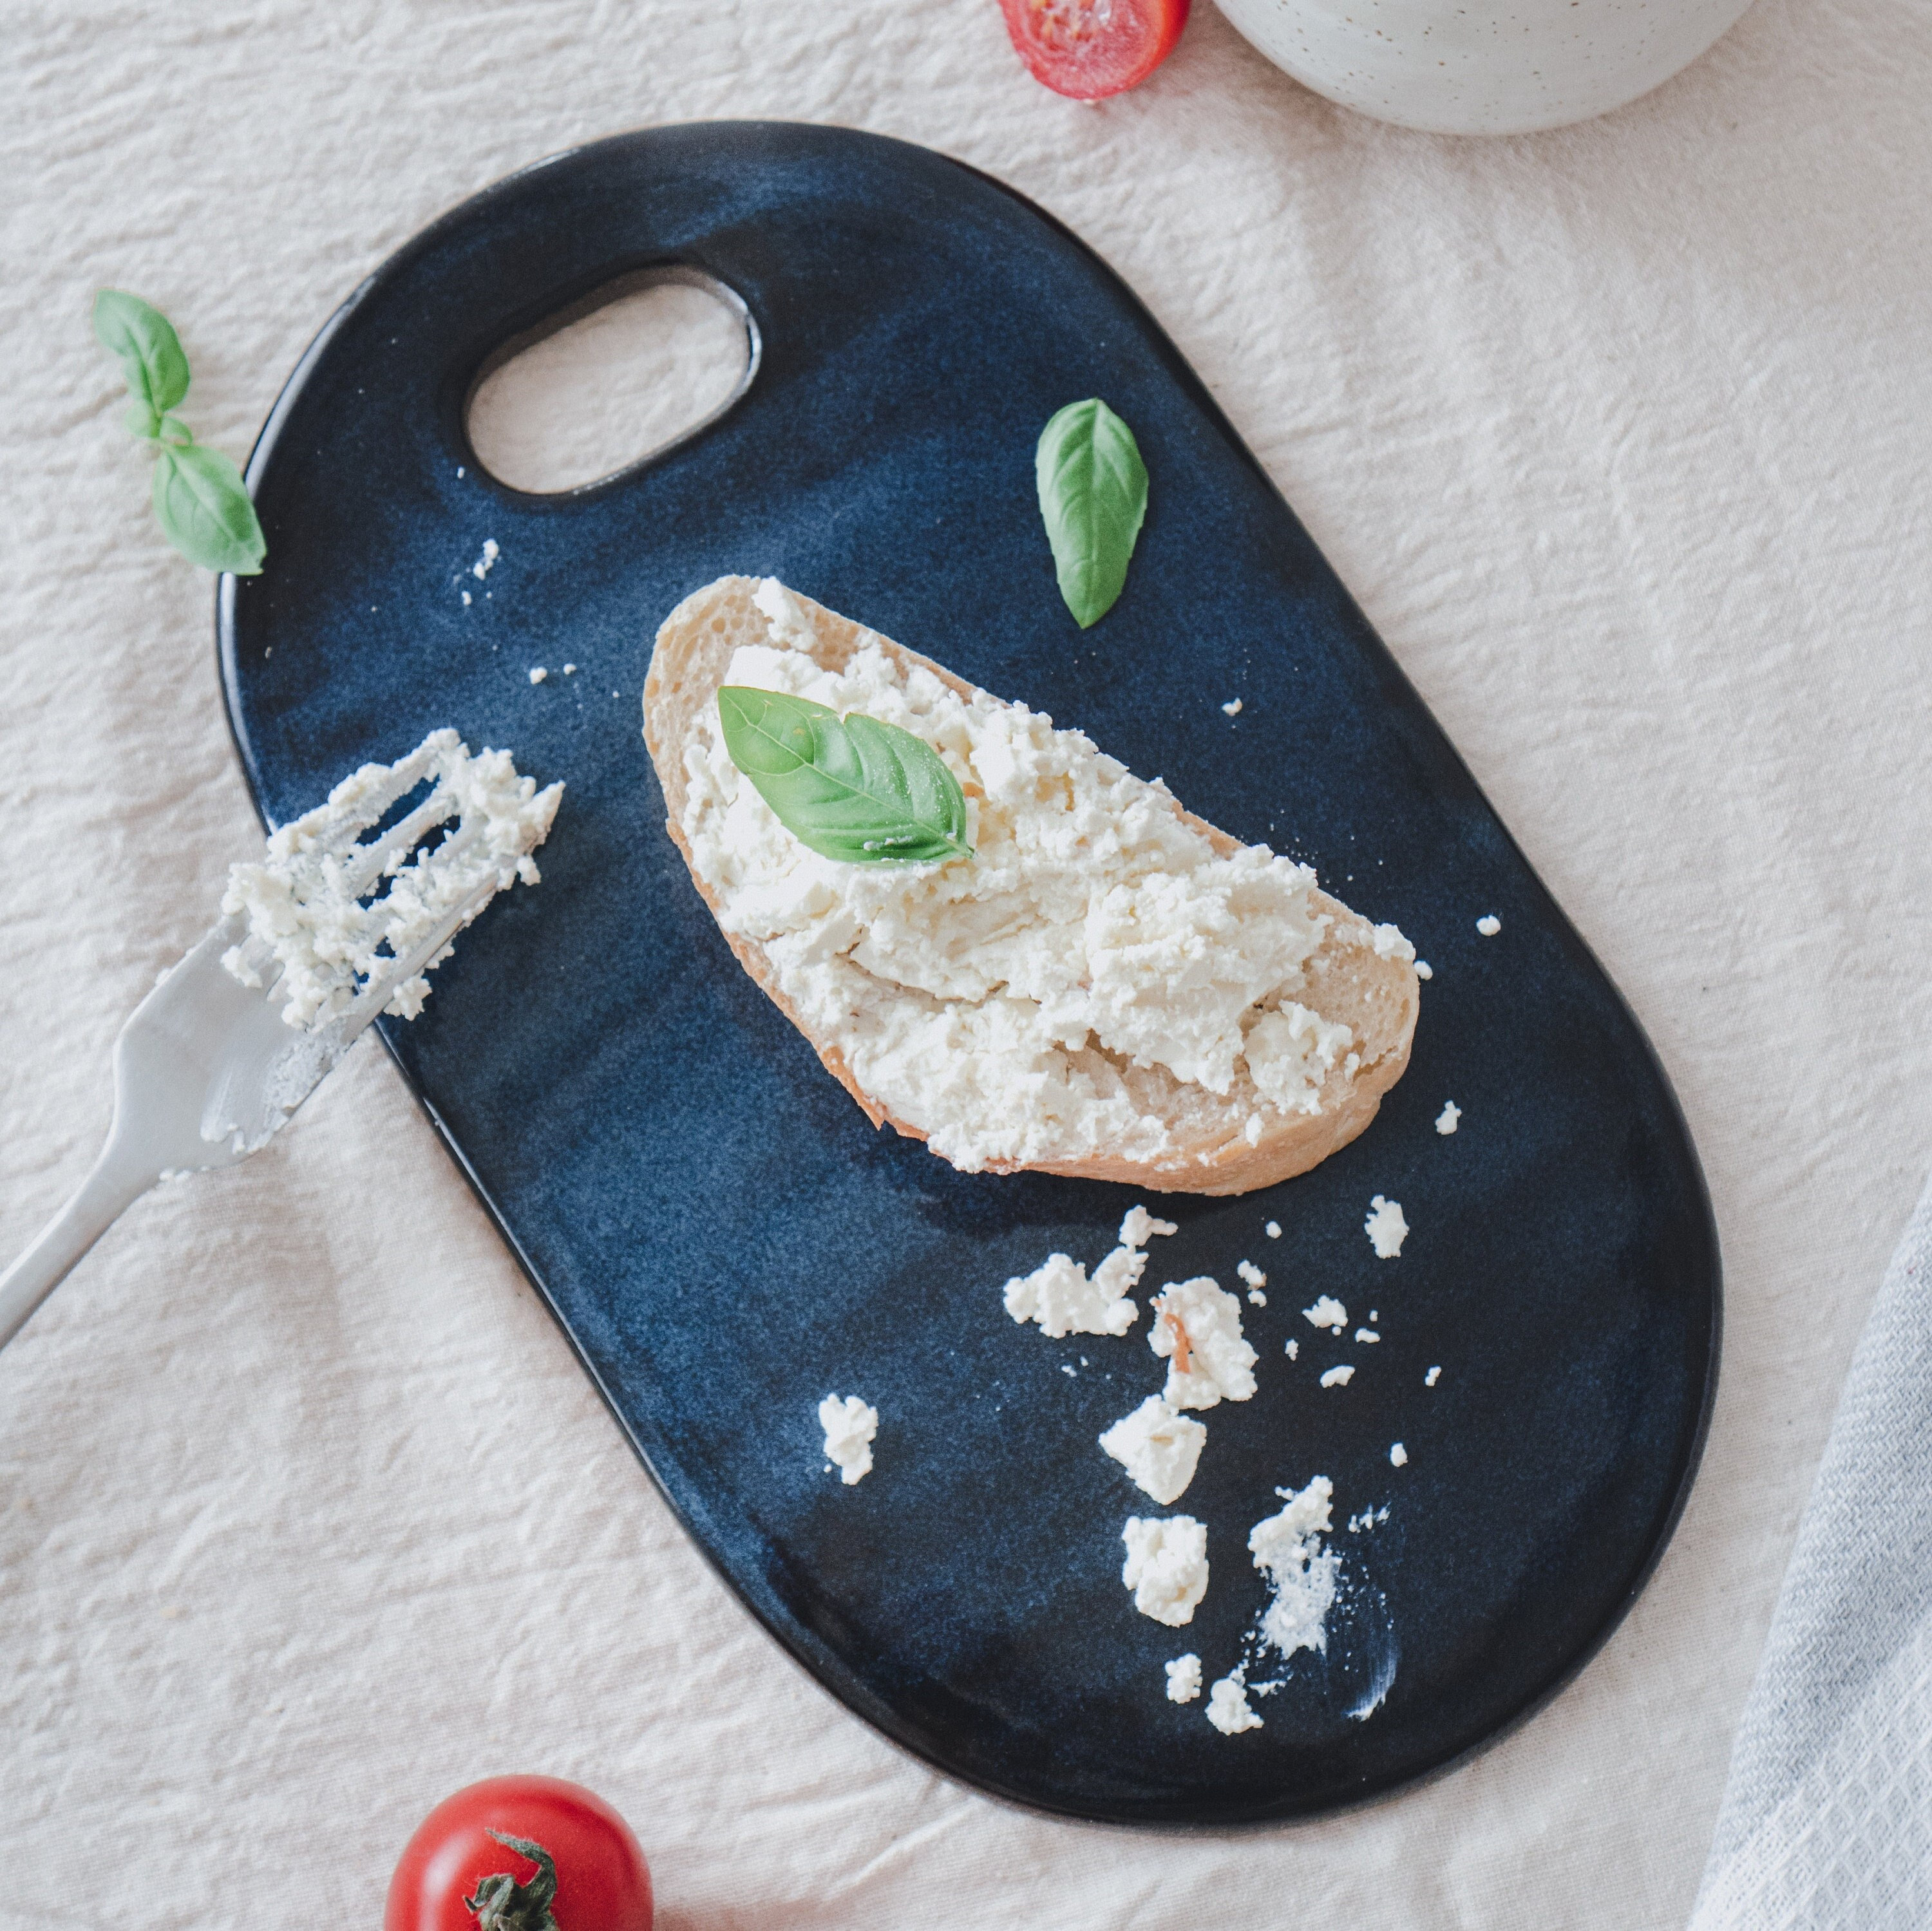 Handmade Ceramic Cutting Board, Cheese, Chopping, Charcuterie, Dessert –  YOMYOM CERAMIC By yossi malca